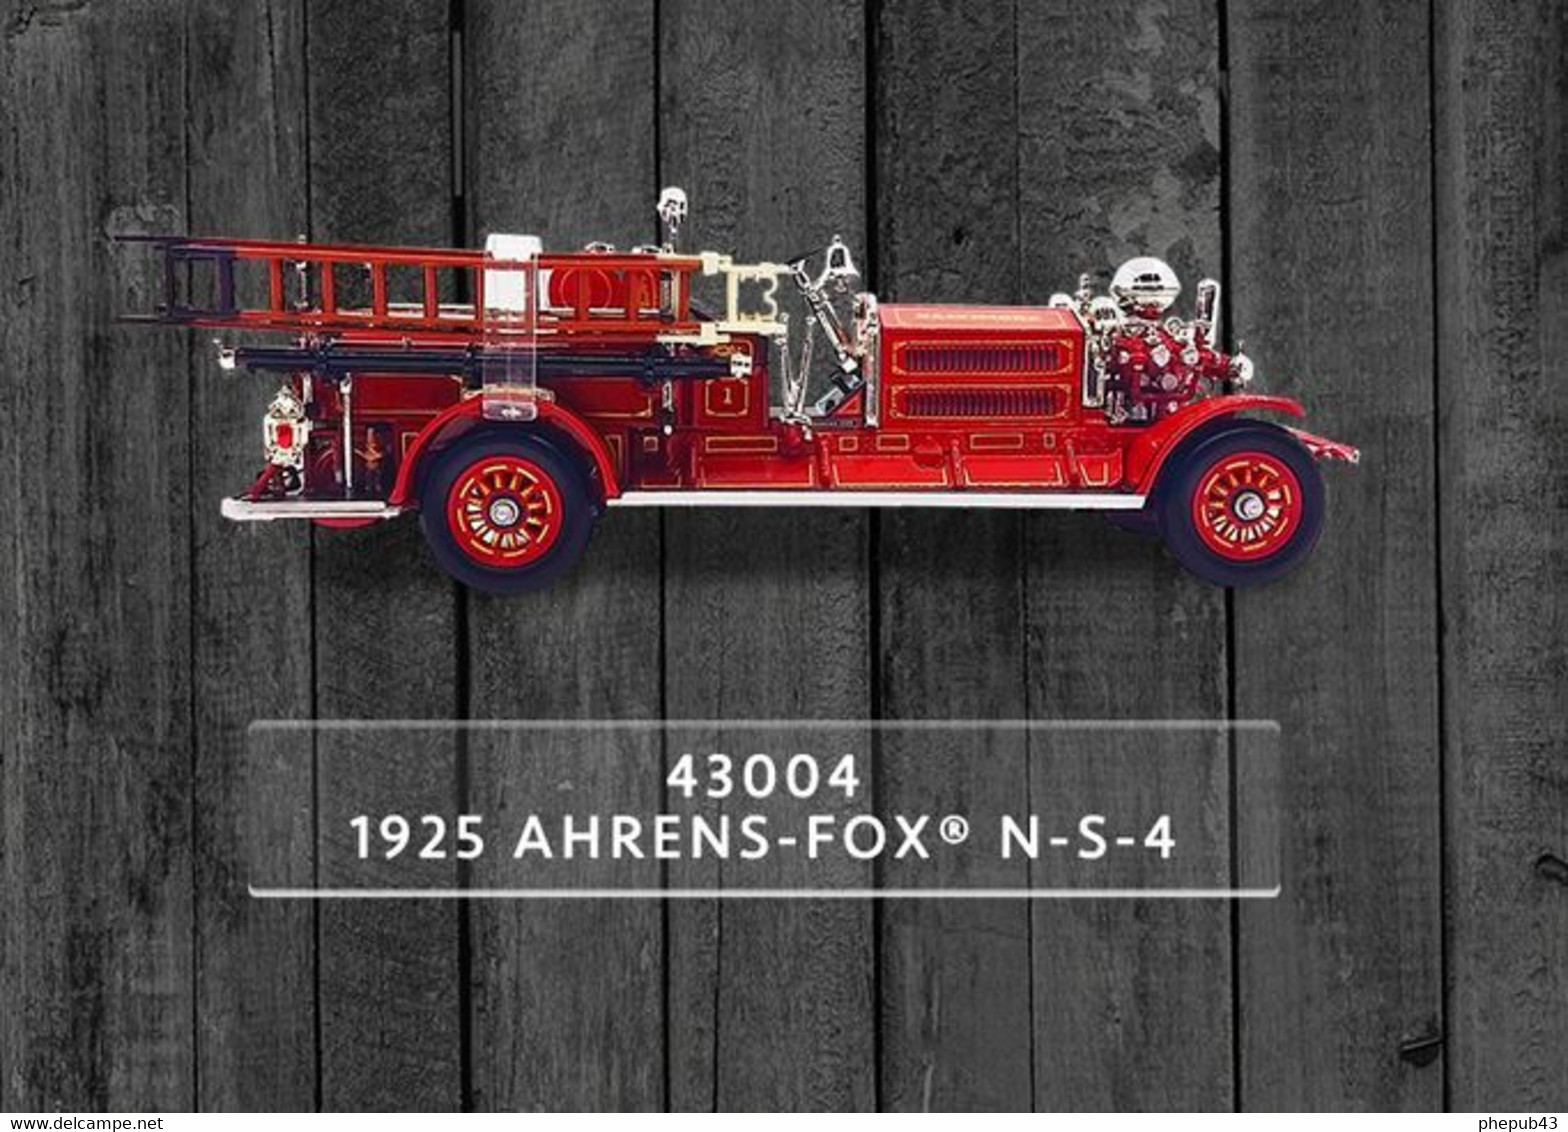 Ahrens-Fox N-S-4 - Baltimore Fire Department - 1925 - Lucky Die Cast - LKW